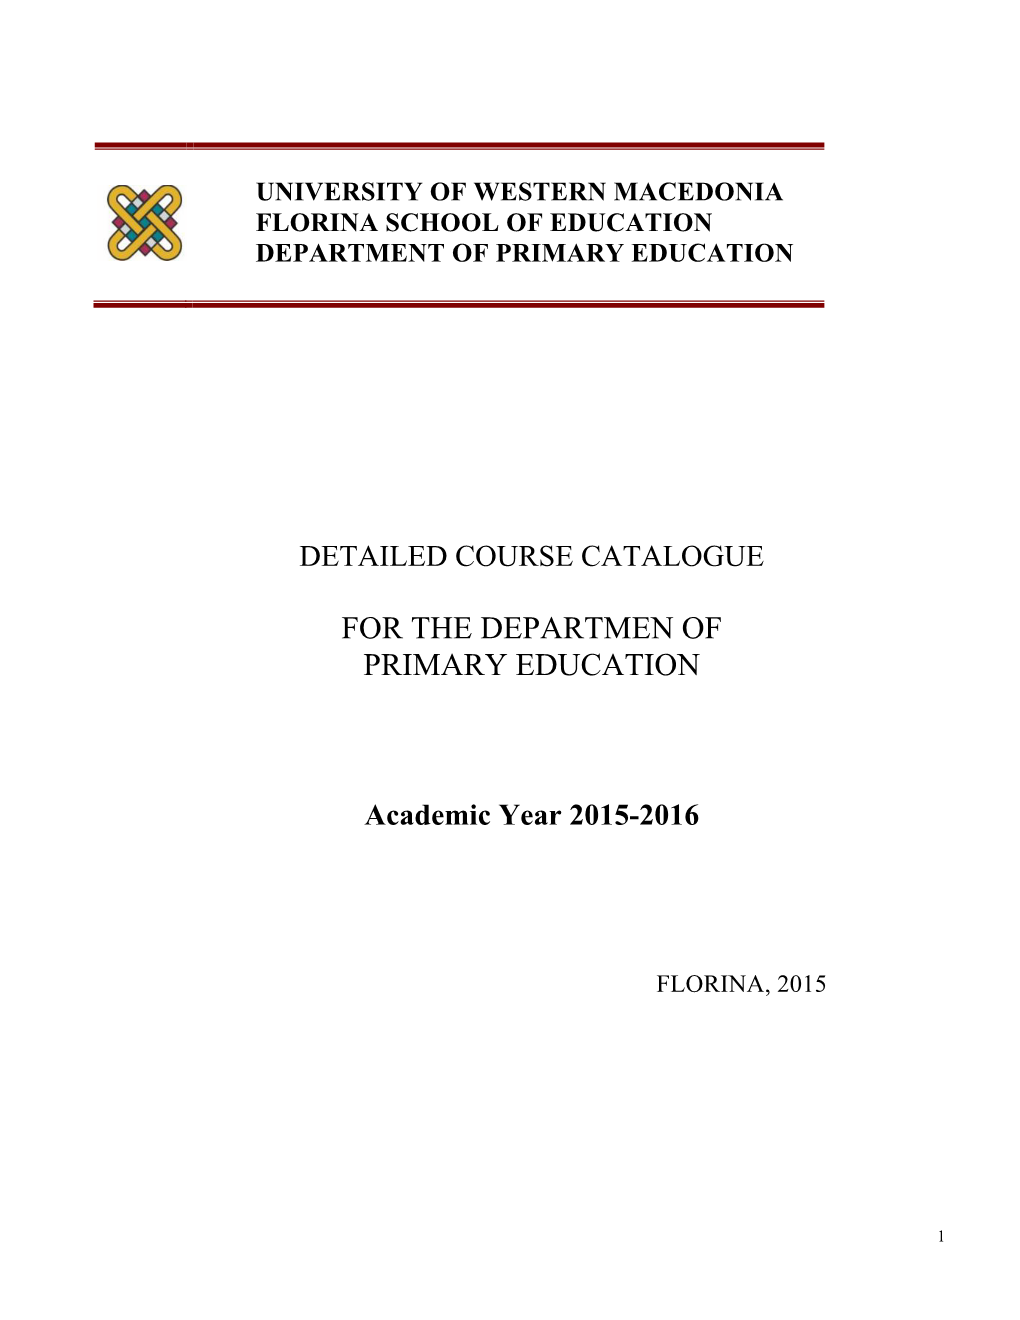 Detailed Course Catalogue